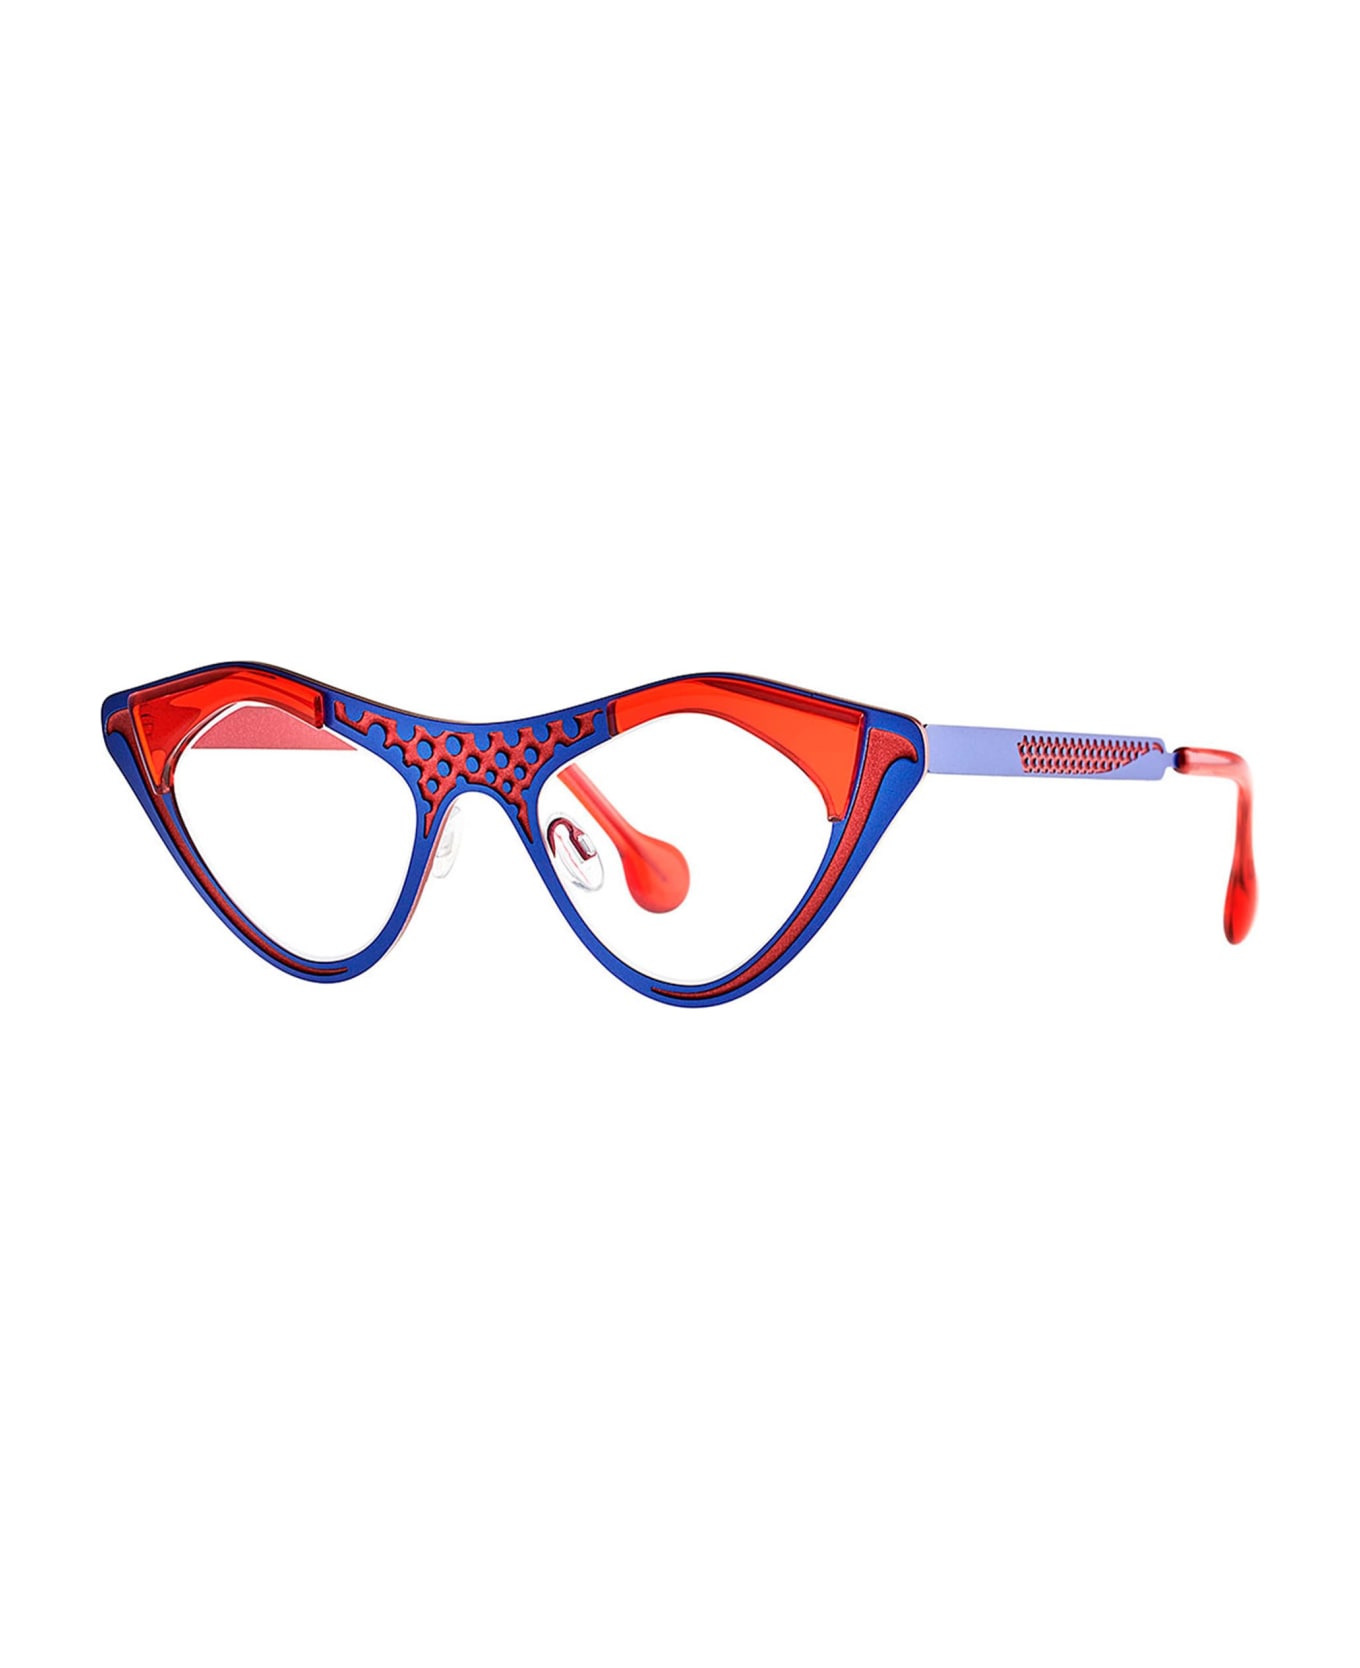 Theo Eyewear Liz - Transparent Coral Rx Glasses - red アイウェア